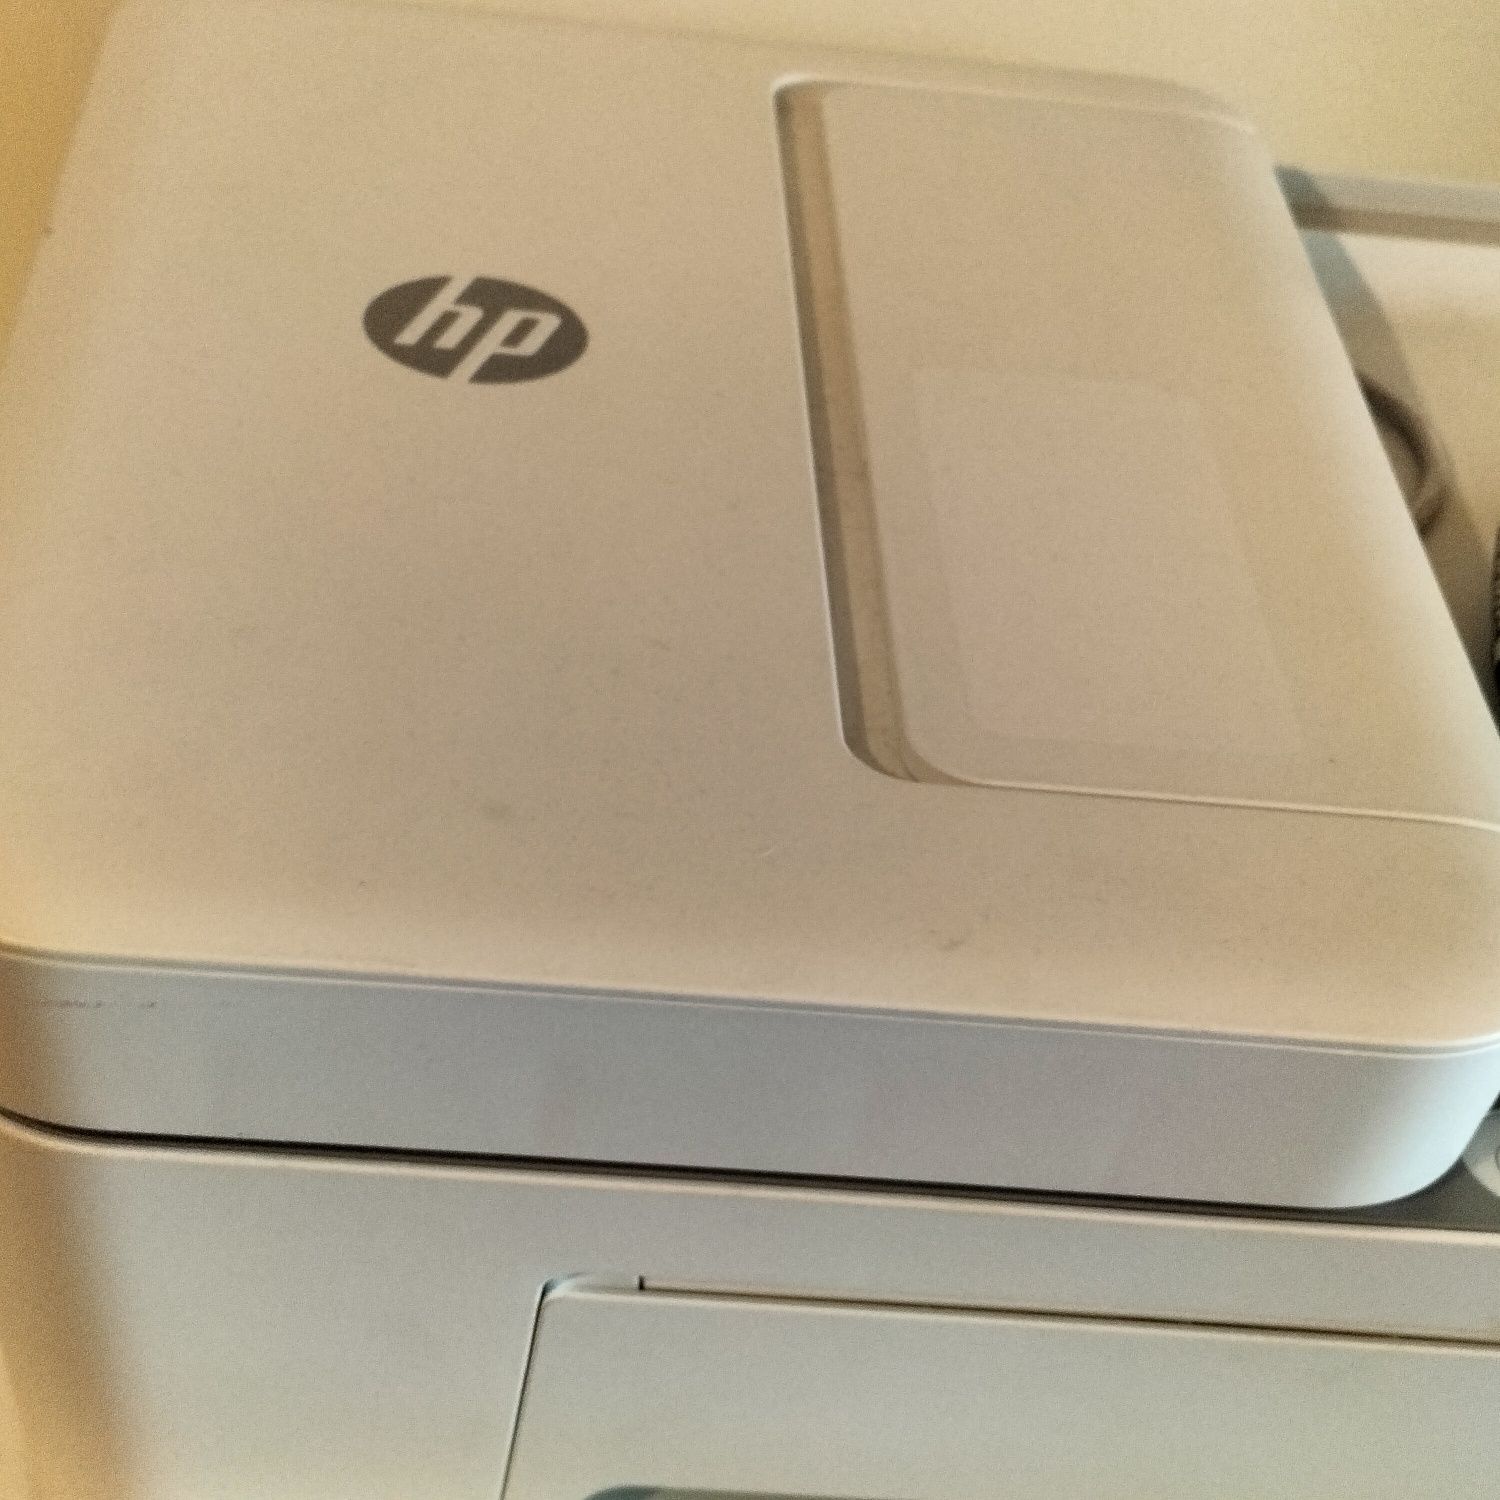 Vendo impressora HP wireless ,com cabo